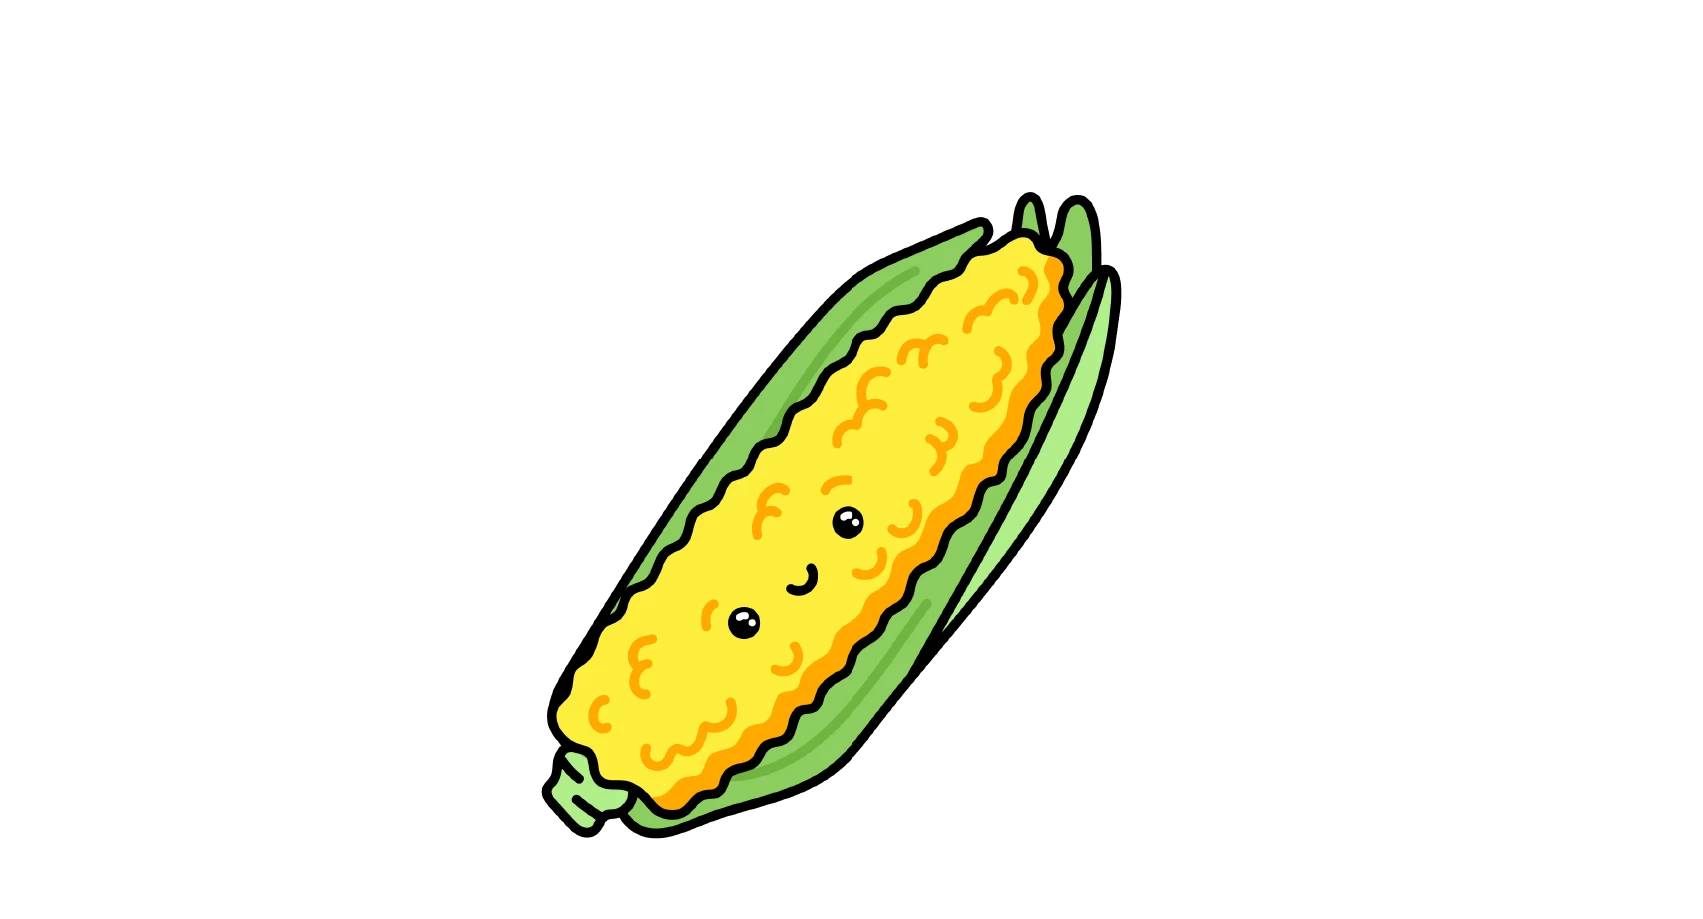 Baby size: Corn